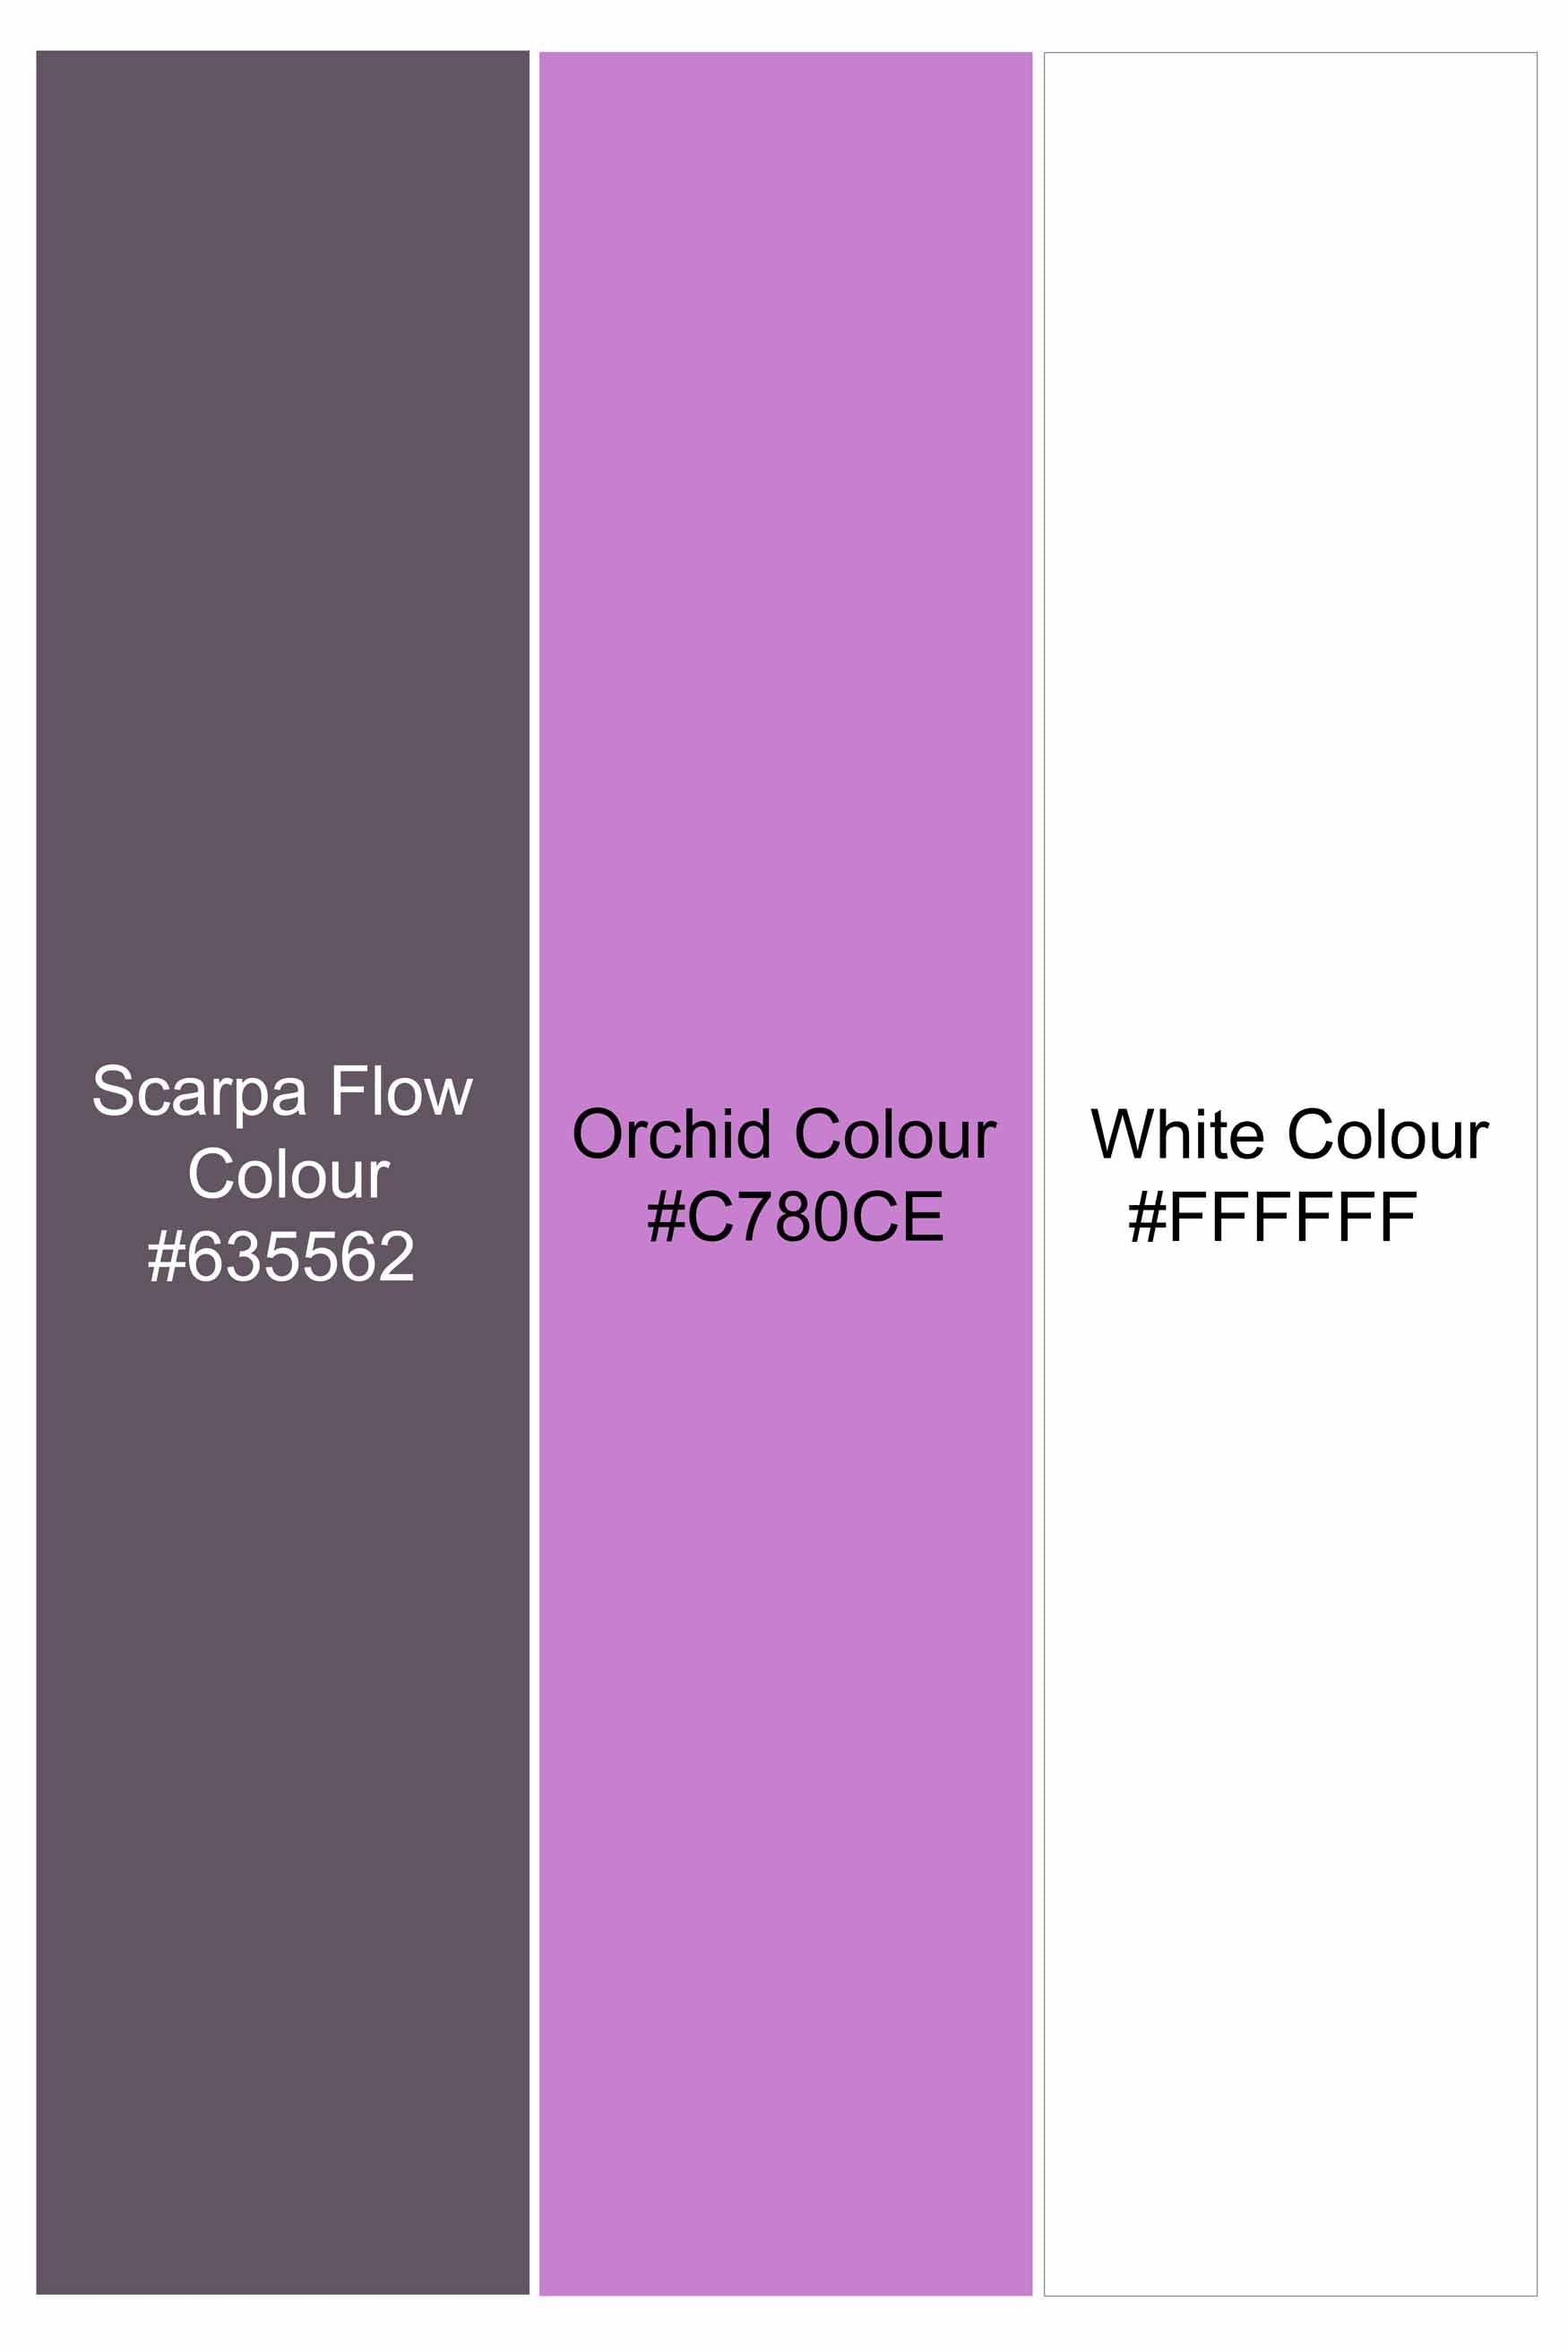 Scarpa Flow Purple Multicolour Striped Dobby Textured Premium Giza Cotton Shirt